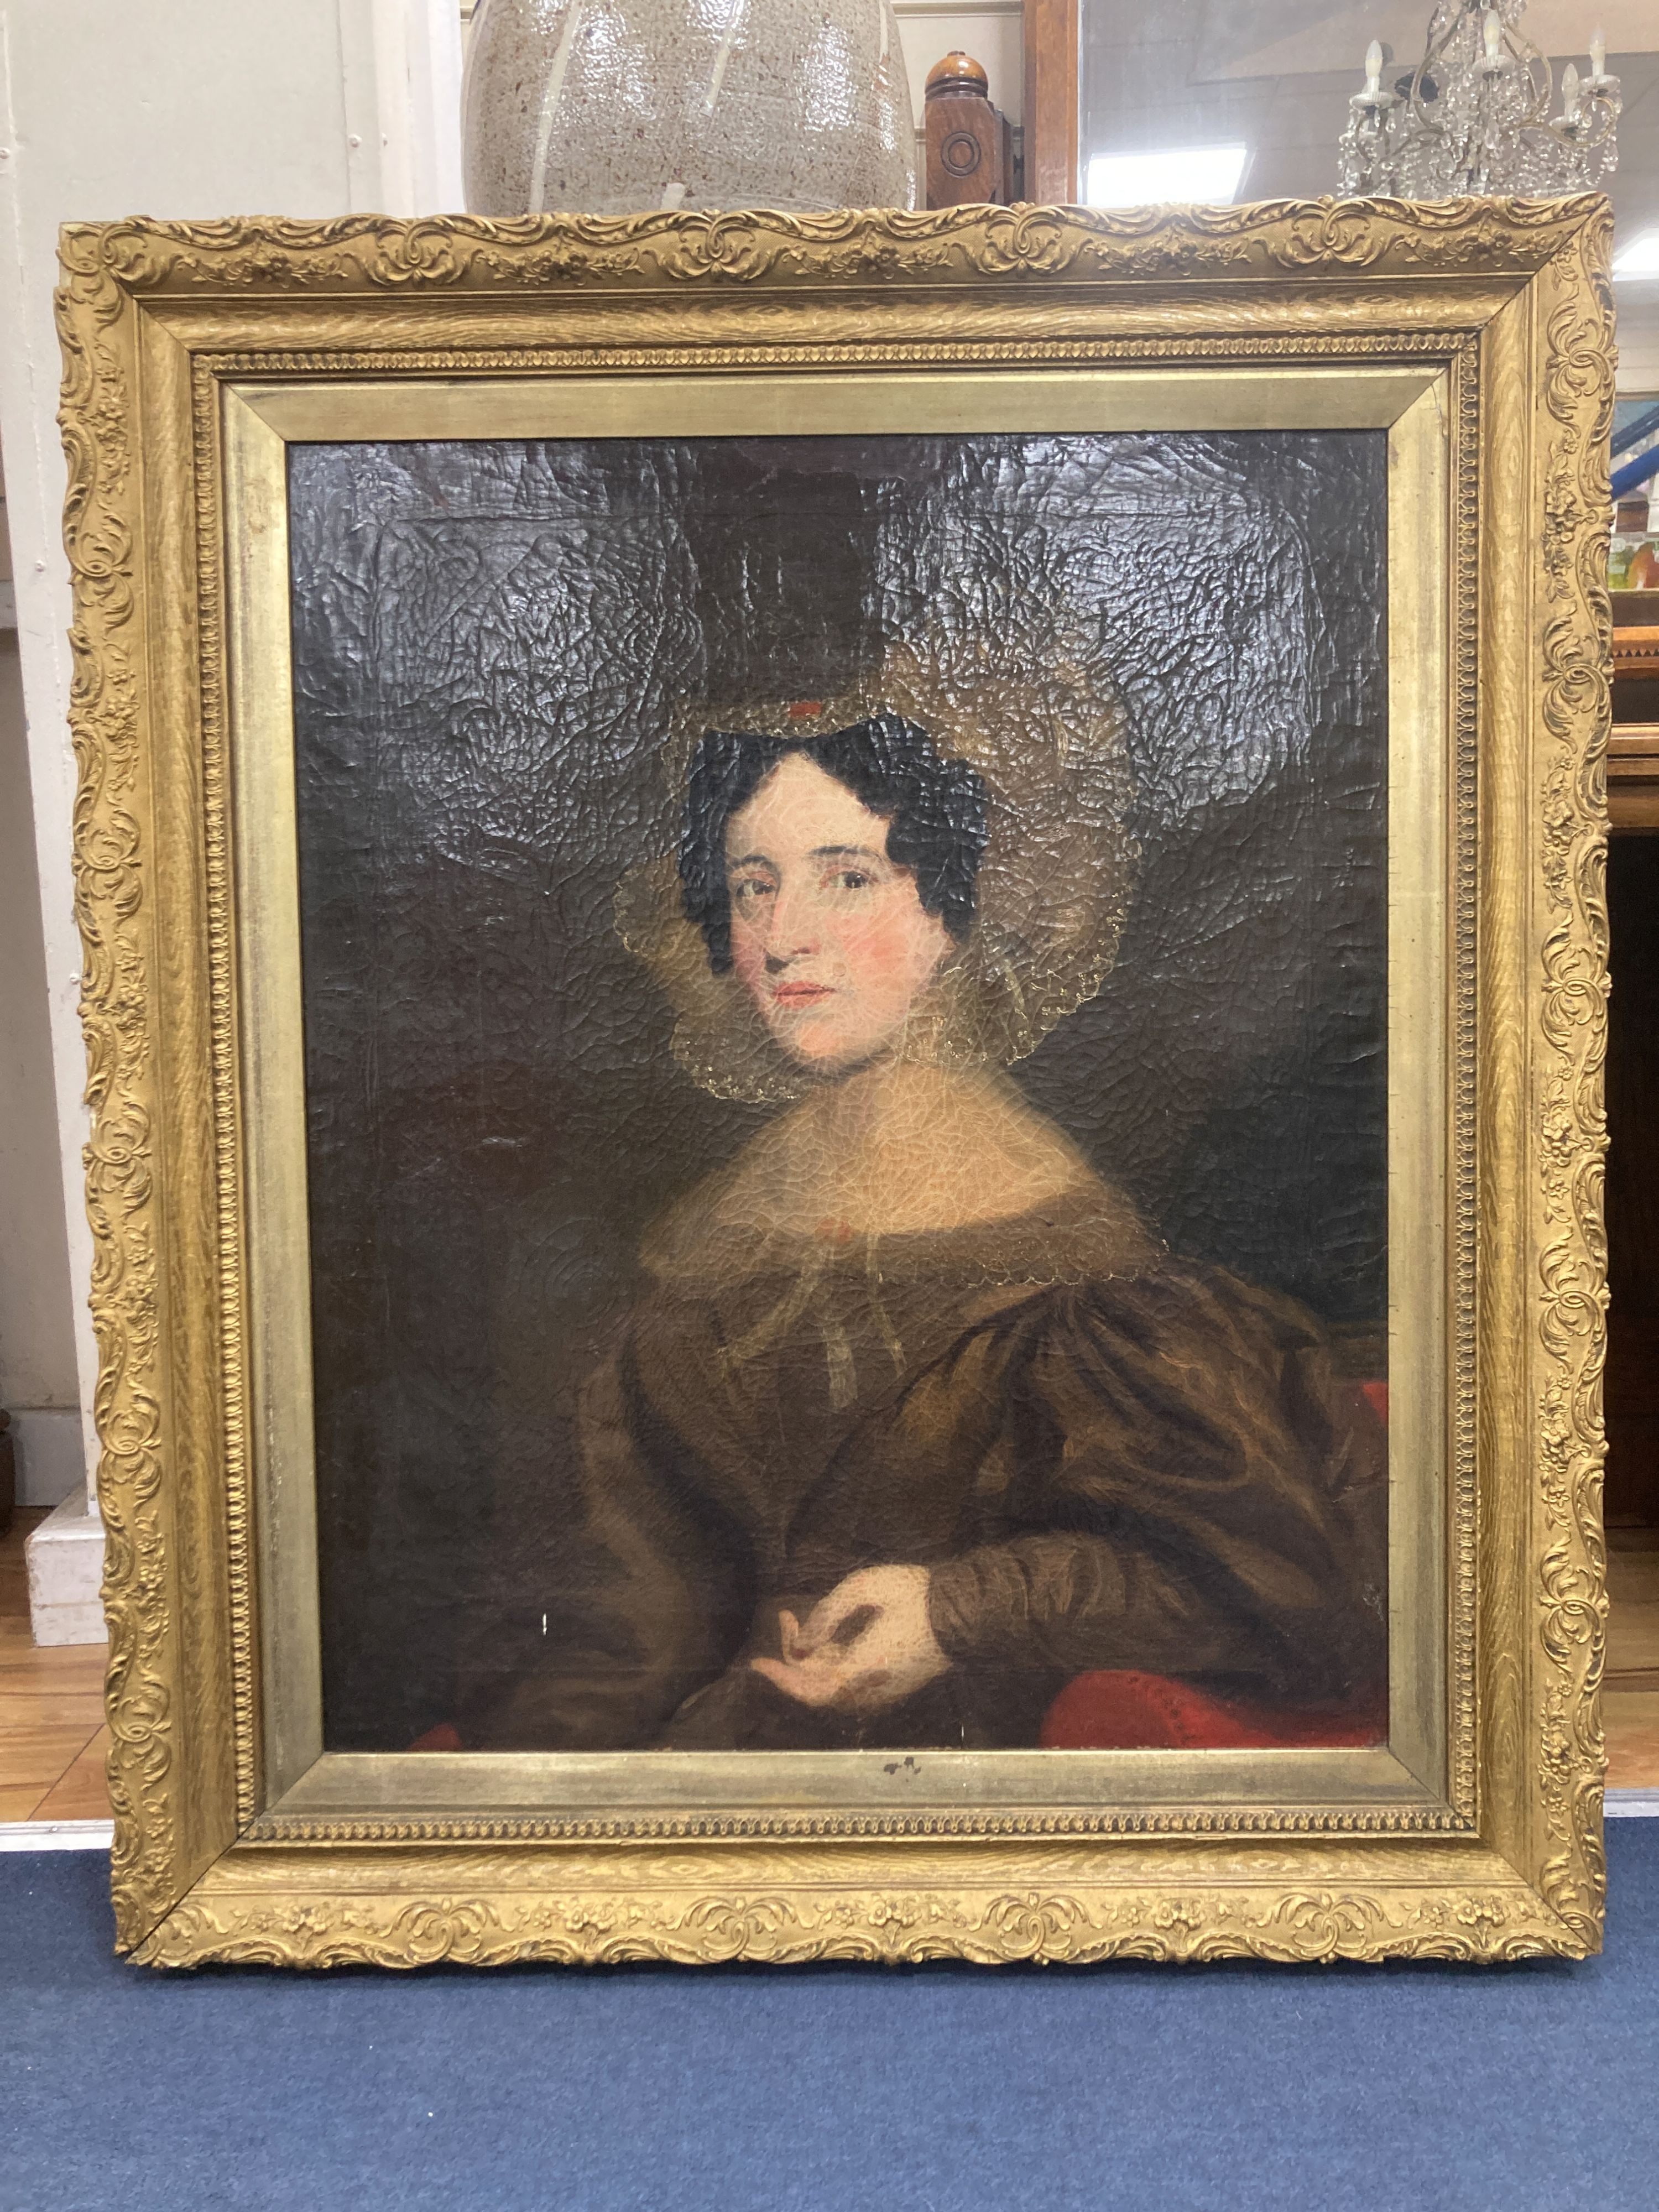 19th century English School, oil on canvas, portrait of a woman, 76 x 62cm.